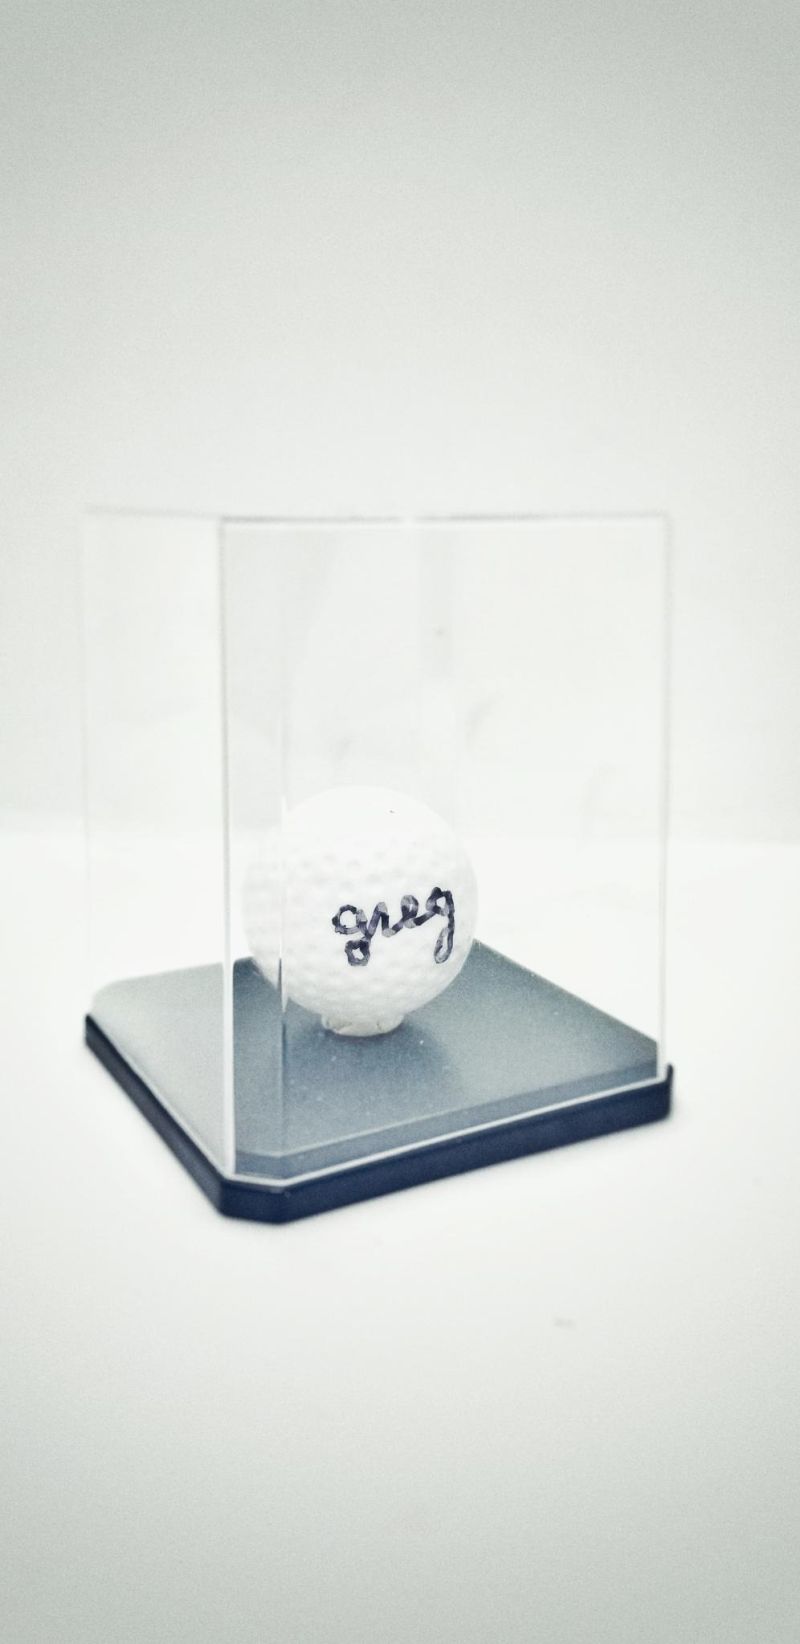 official "bootleg greg" golf ball signed by "greg"